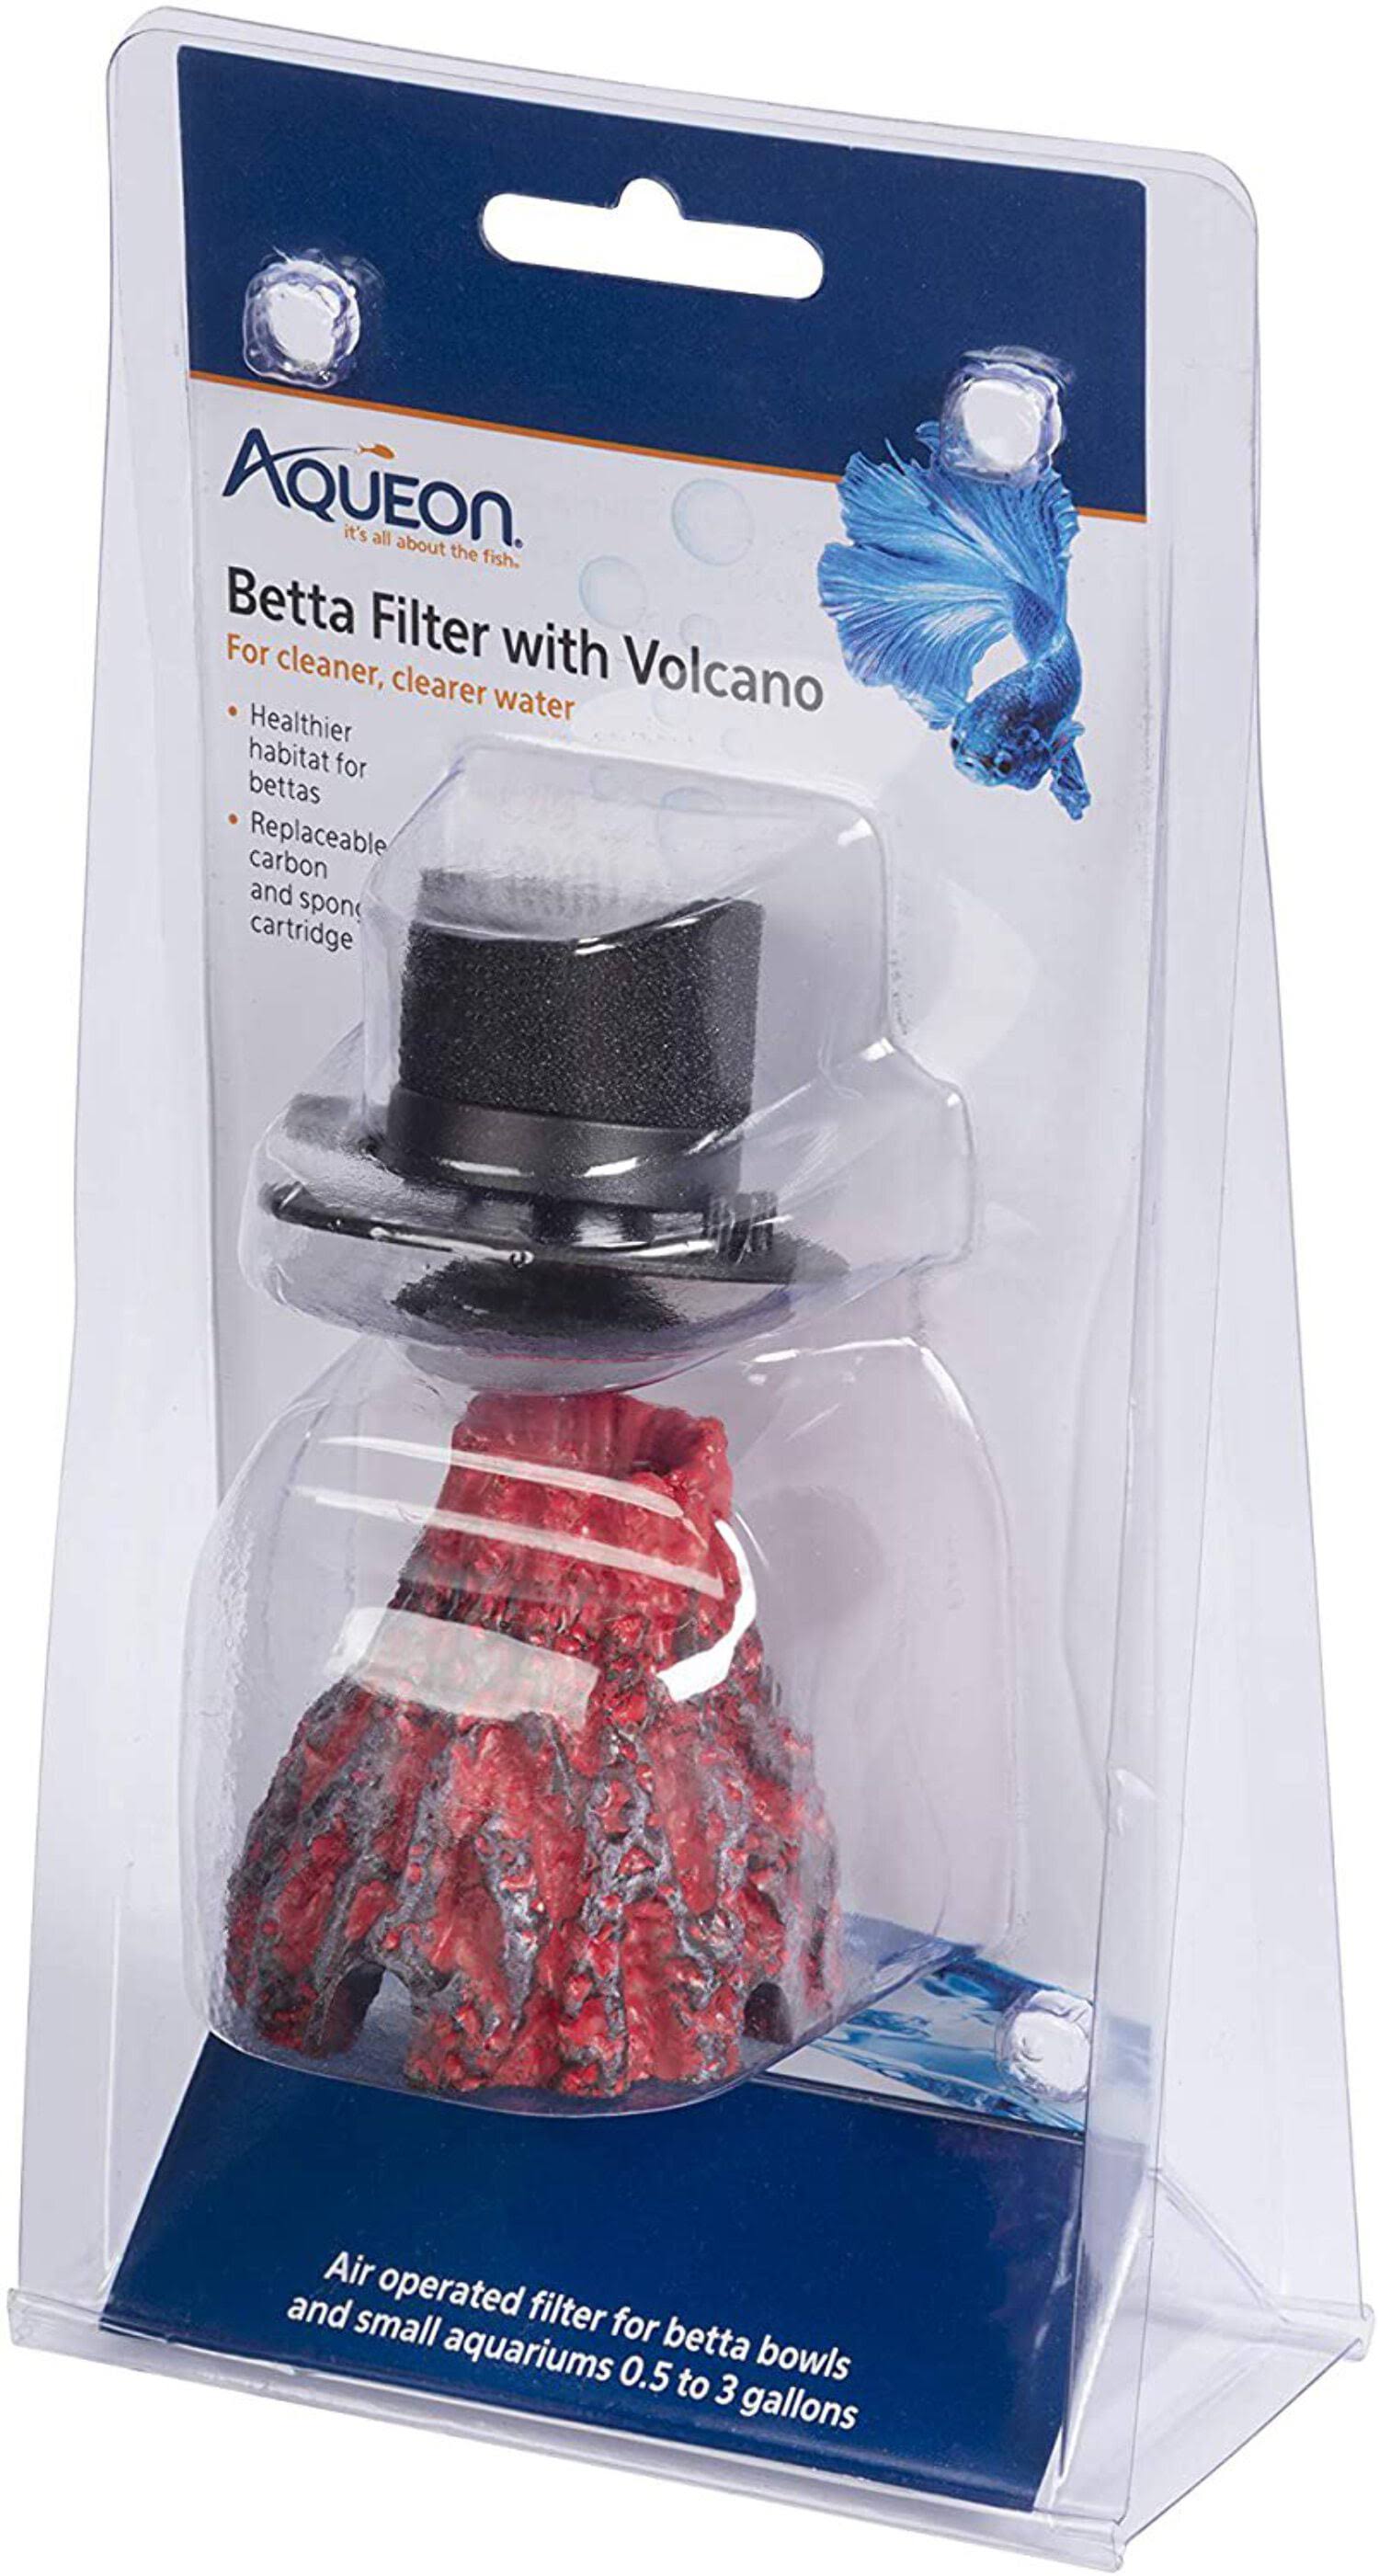 Aqueon Betta Filter With Volcano